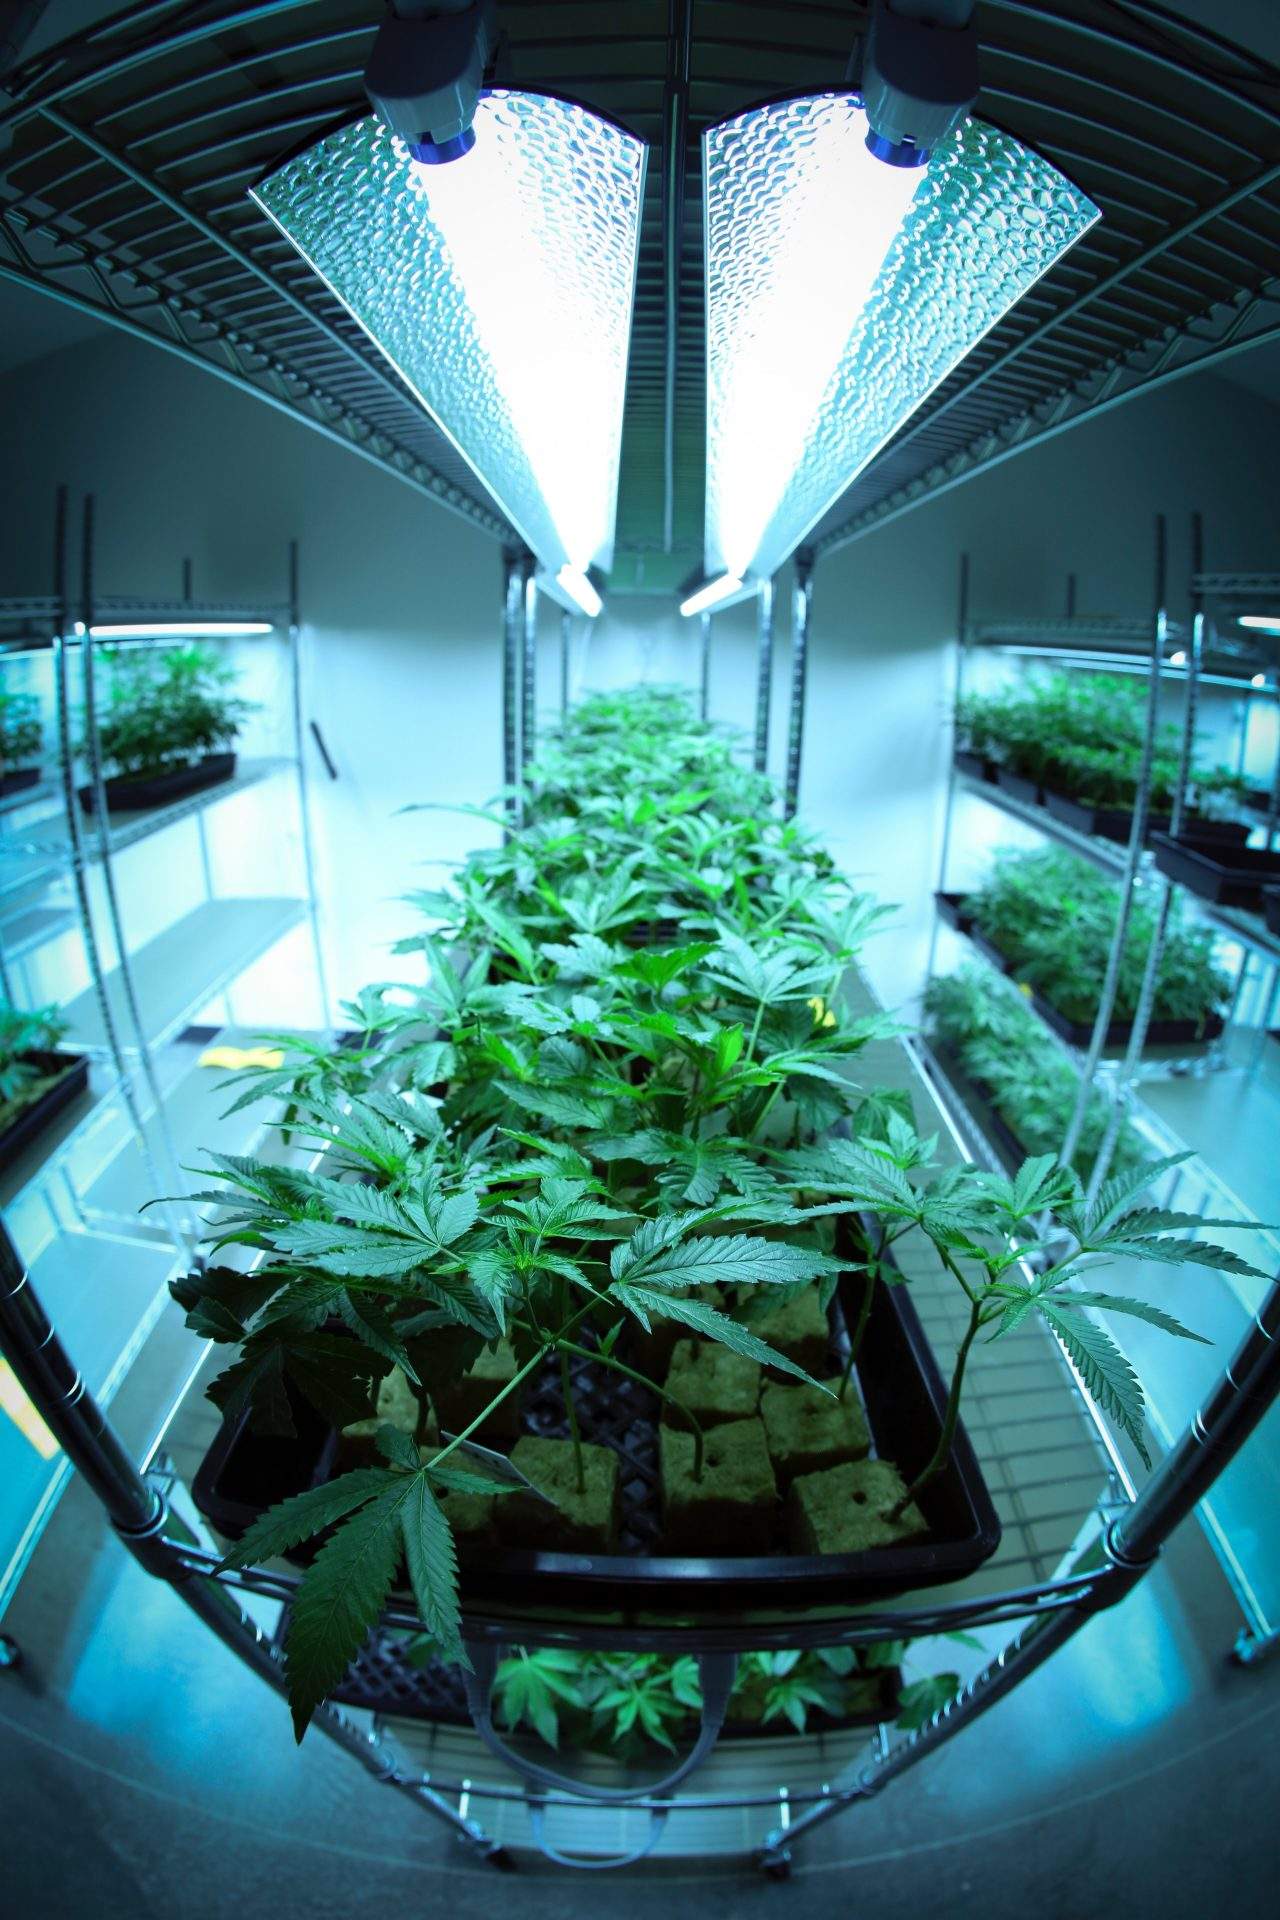 piantagione di cannabis indoor